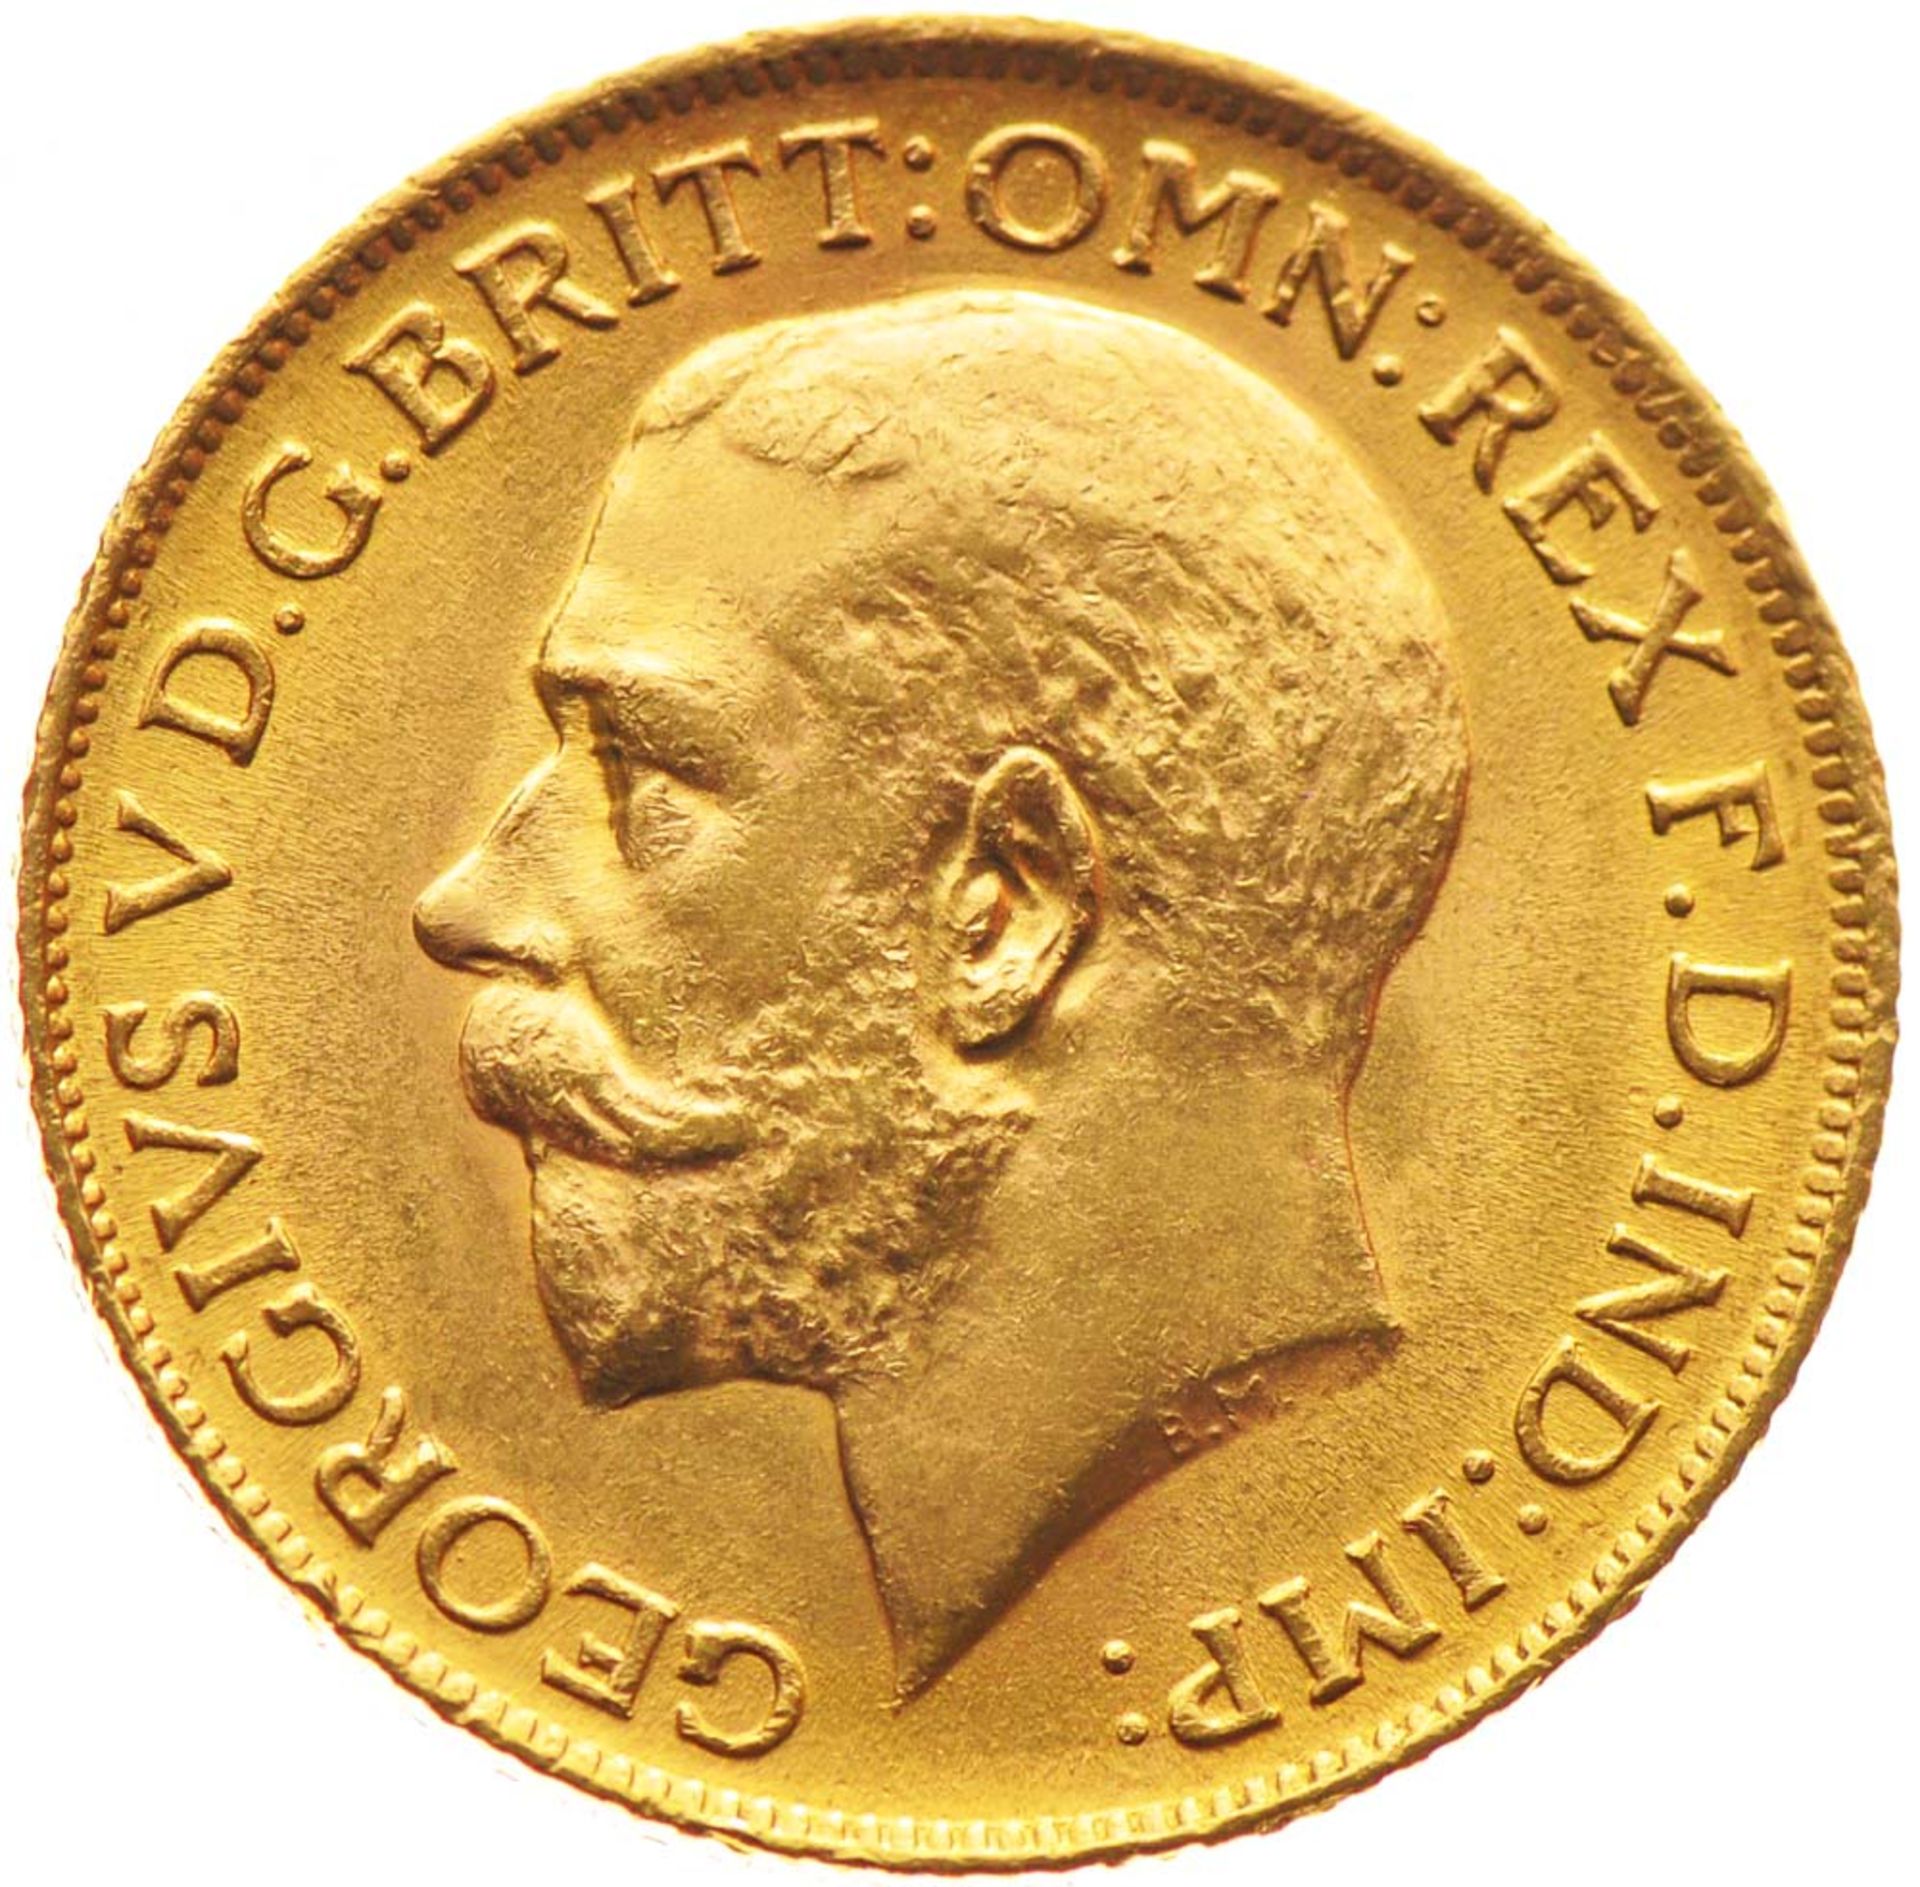 1912 - Gold Half Sovereign - King George V, London - F